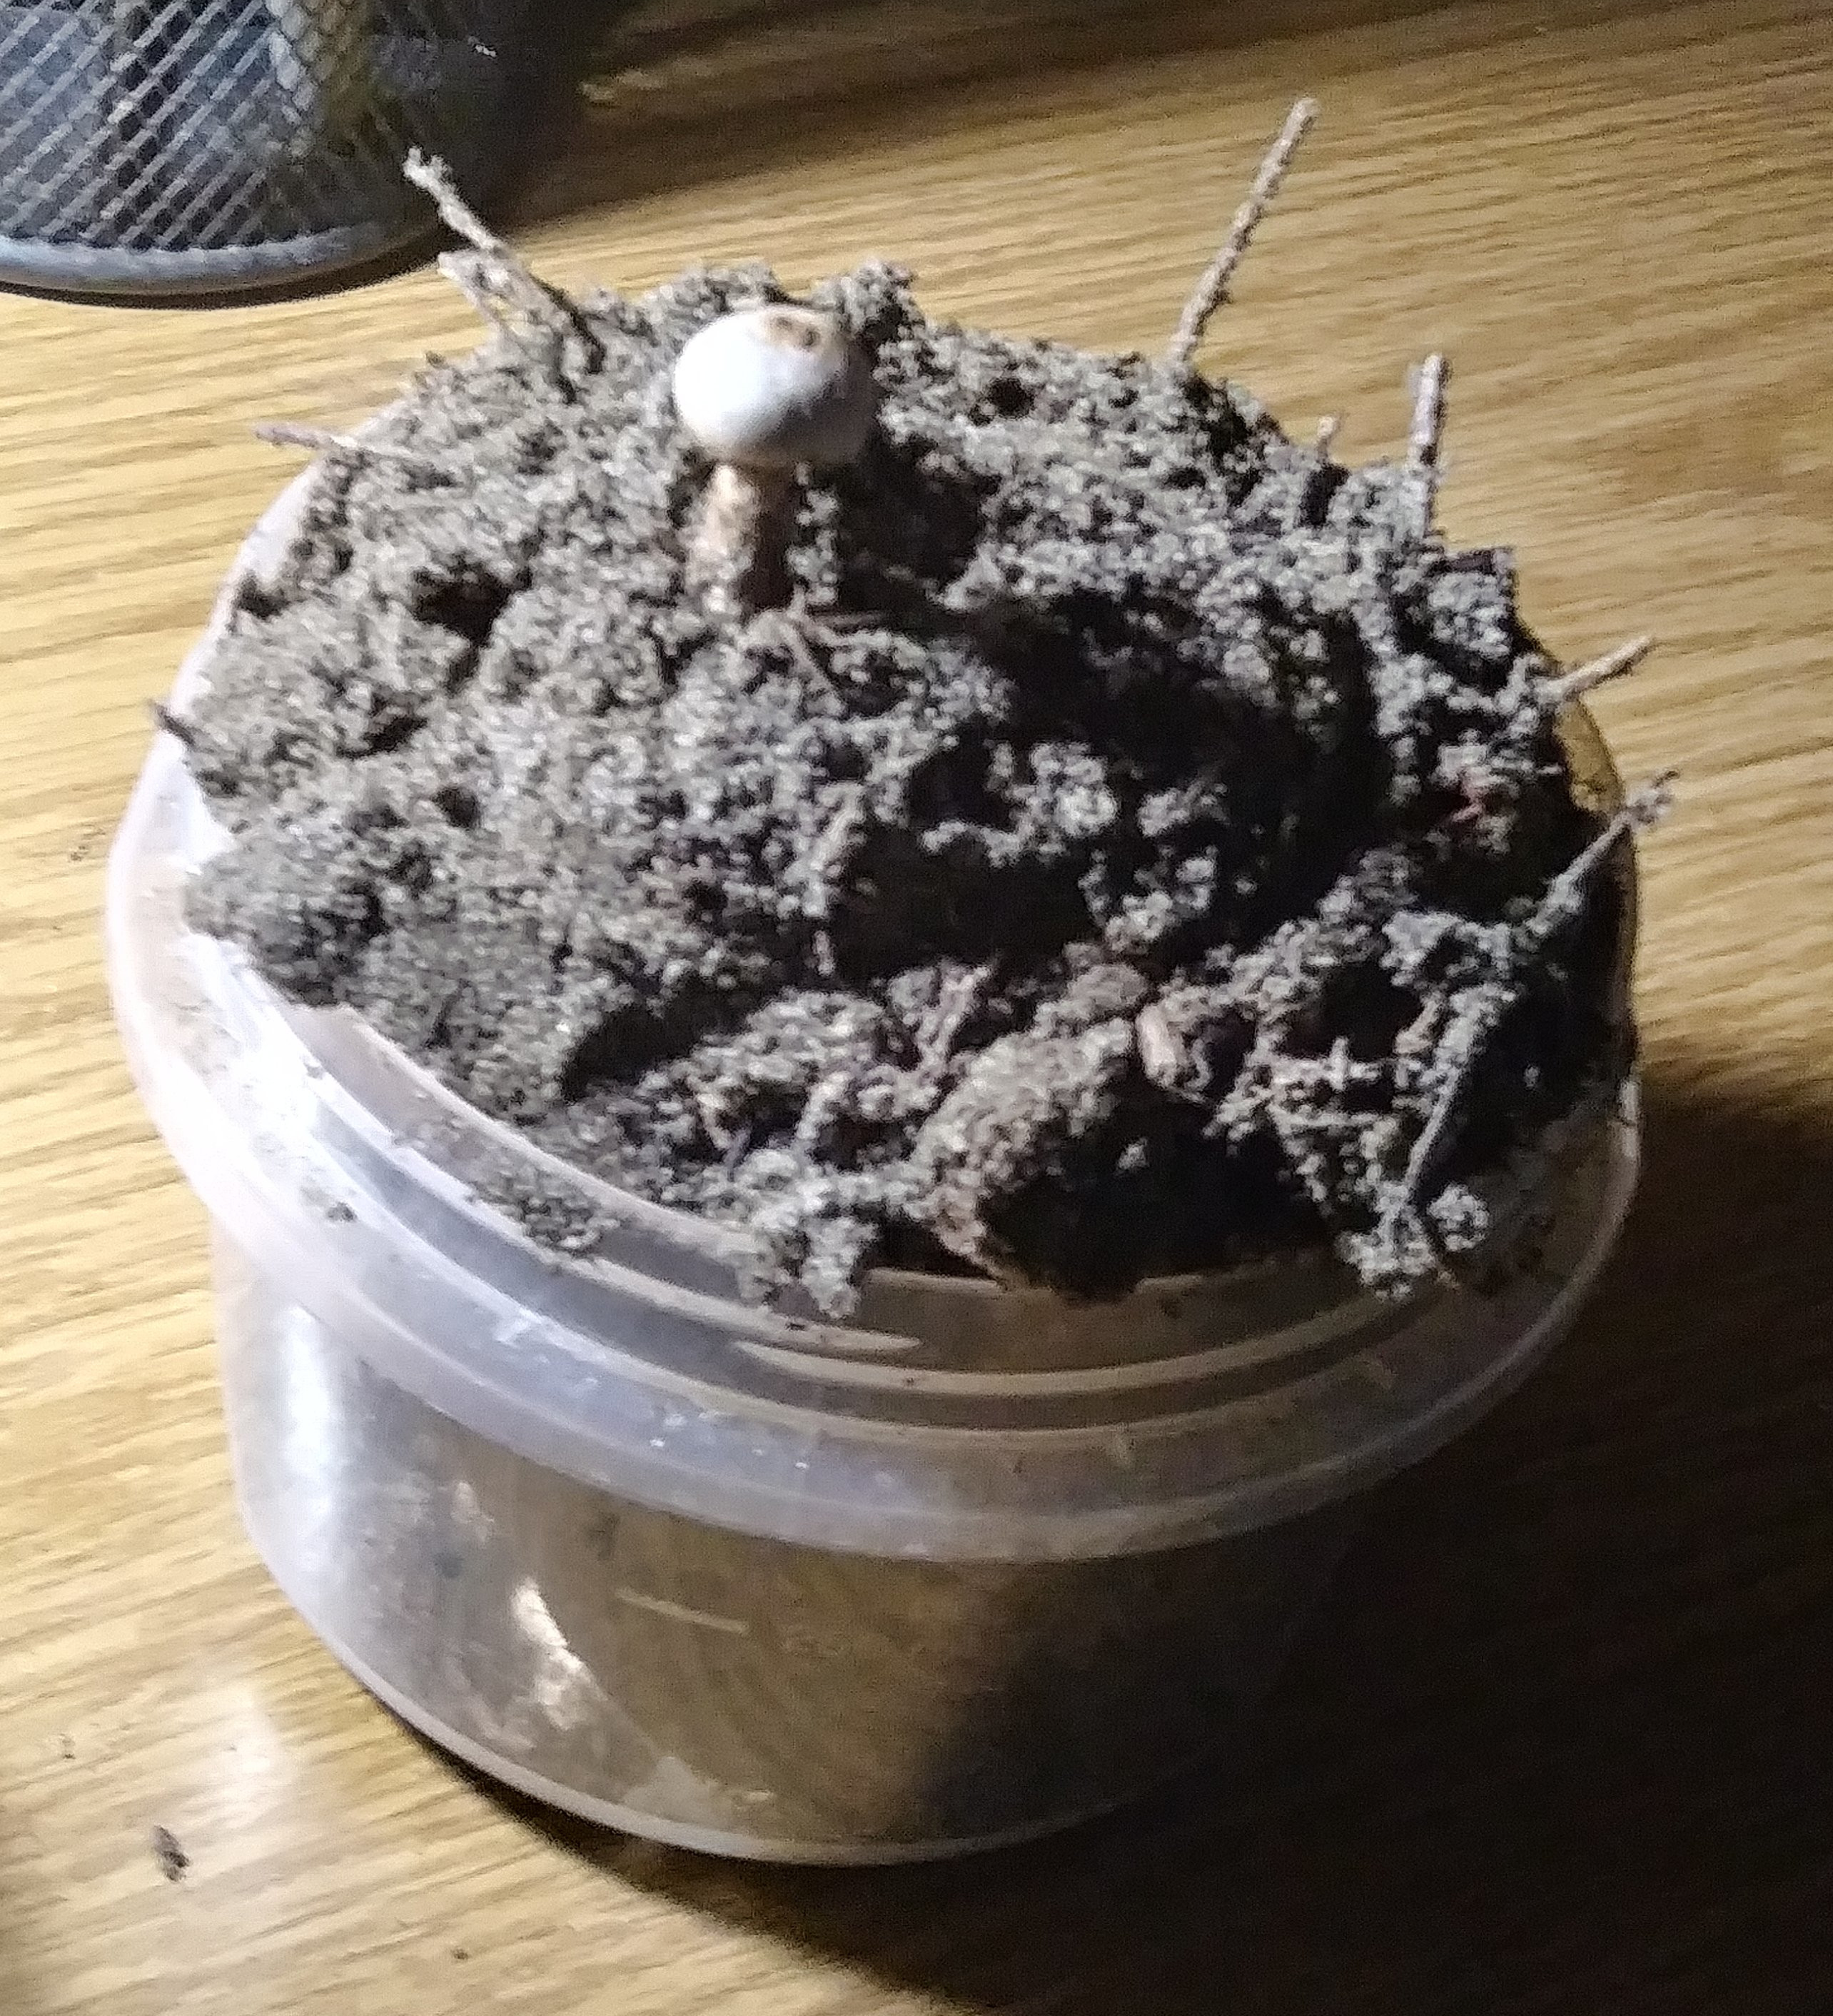 Mushroom in container full of dirt